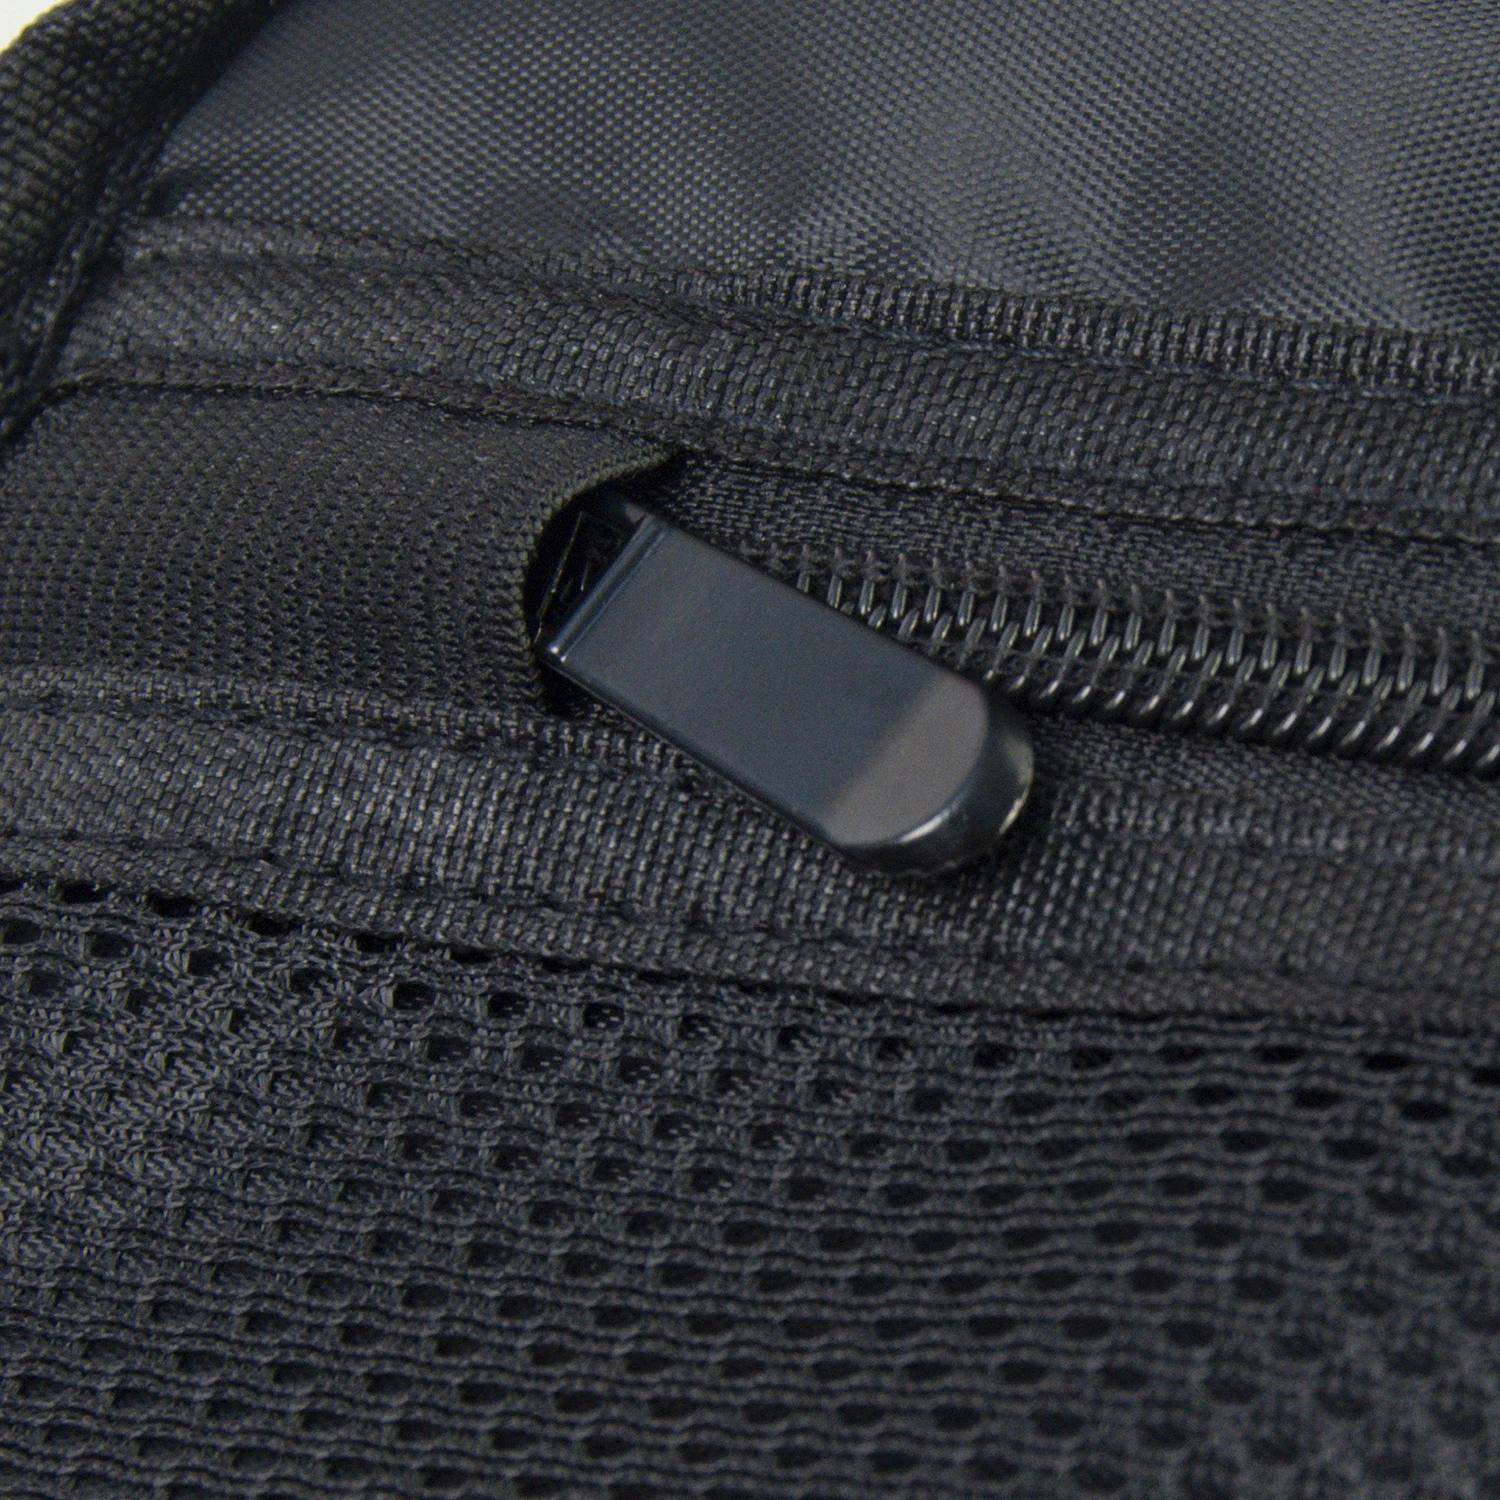 FOSOTO B900 New Camera Bag DSLR Camera handbag Waterproof Shoulder Bag Camera Case For Canon Nikon Sony Lens